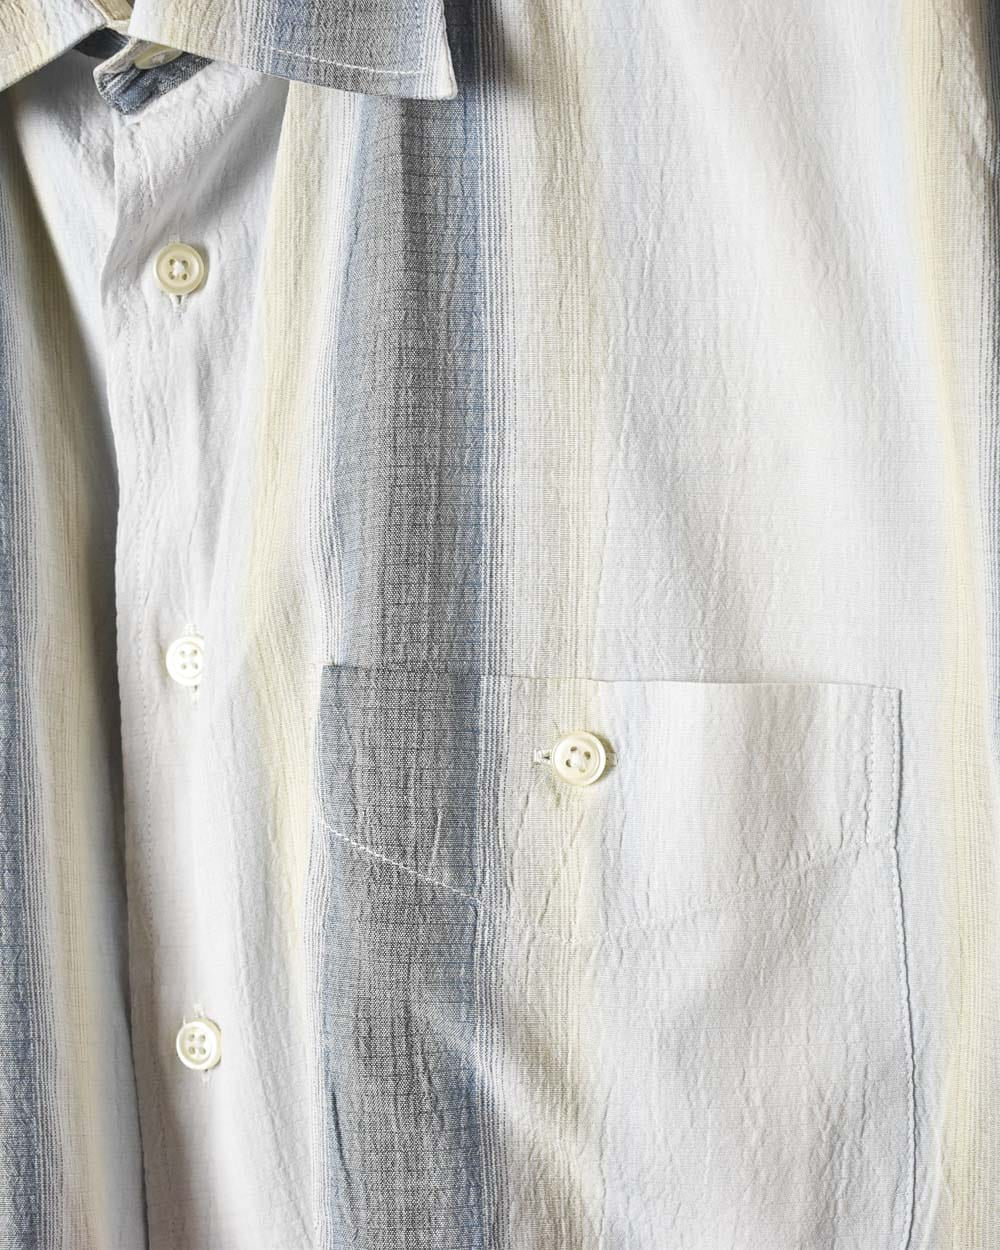 Multicolour Striped Short Sleeved Shirt - XX-Large